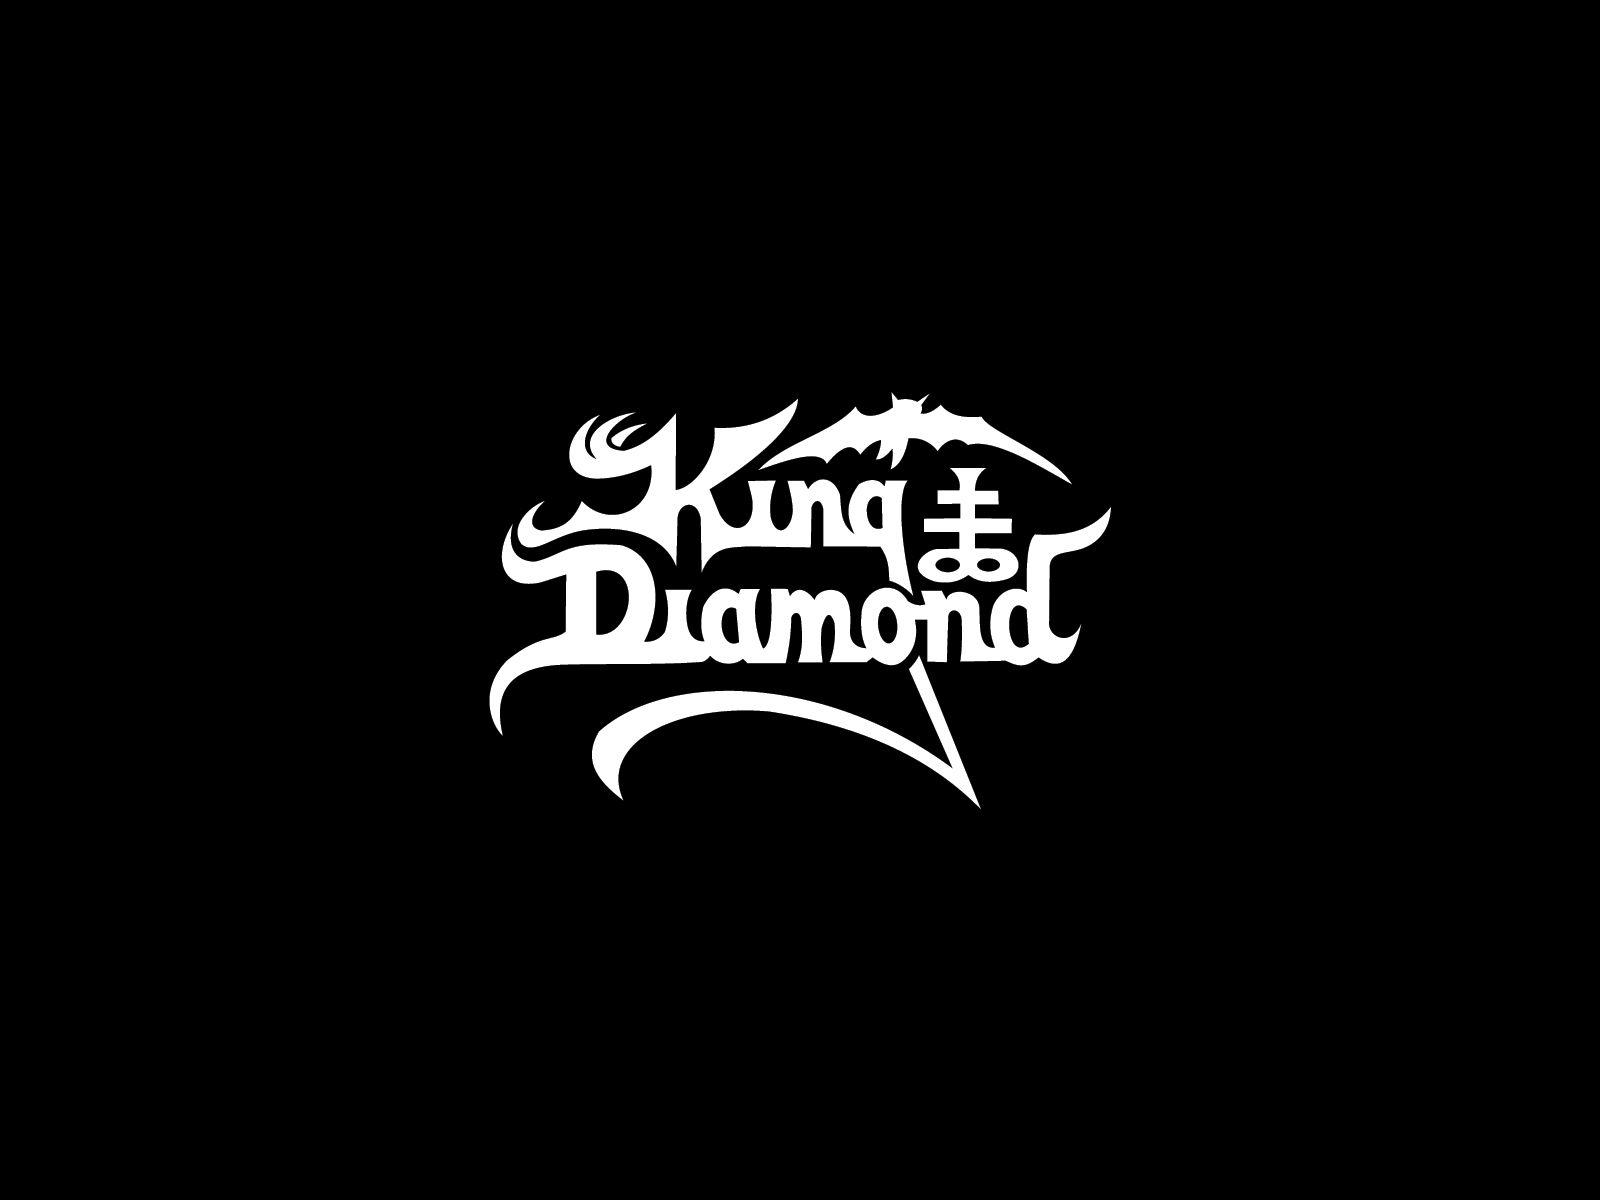 King Diamond Logo - King diamond band logo | Band logos - Rock band logos, metal bands ...